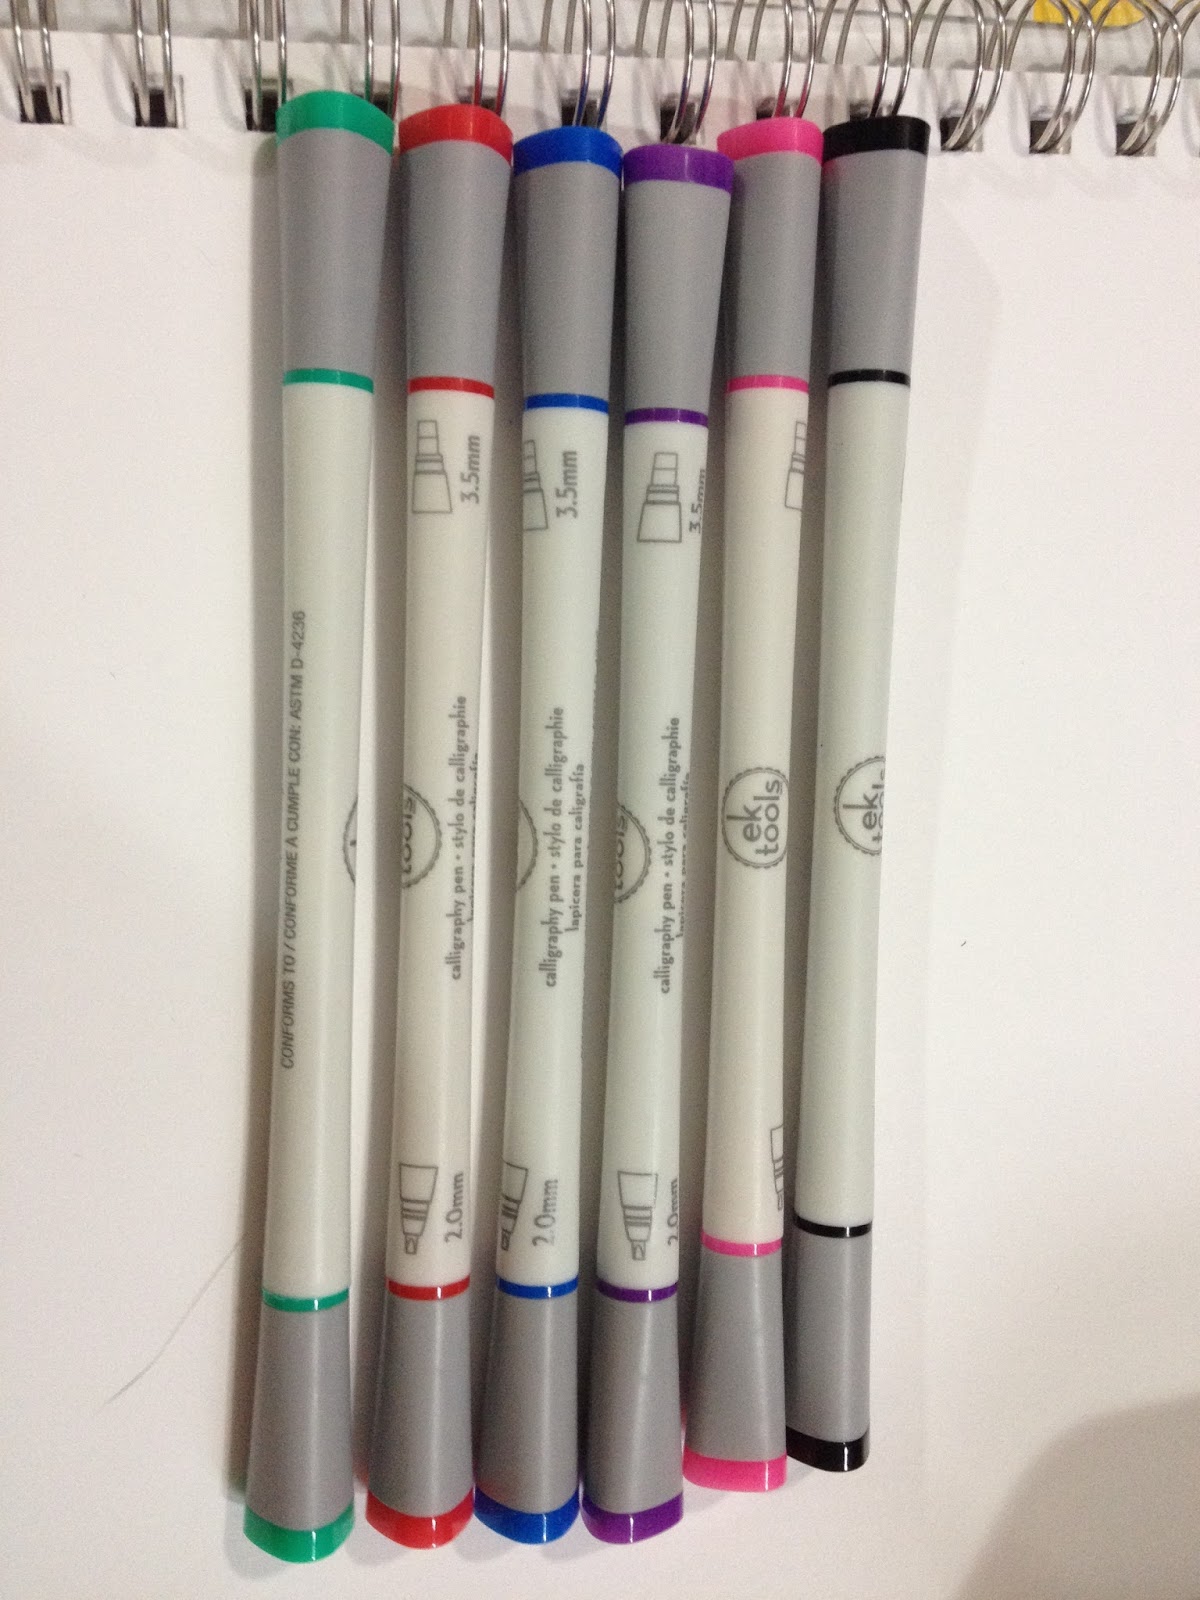 Miss Royale Dual Tip brush Pens, For Drawing, sketching,  Calligraphy, (Pack Of 12) Super Fine & Brush Tip Nib Sketch Pen 